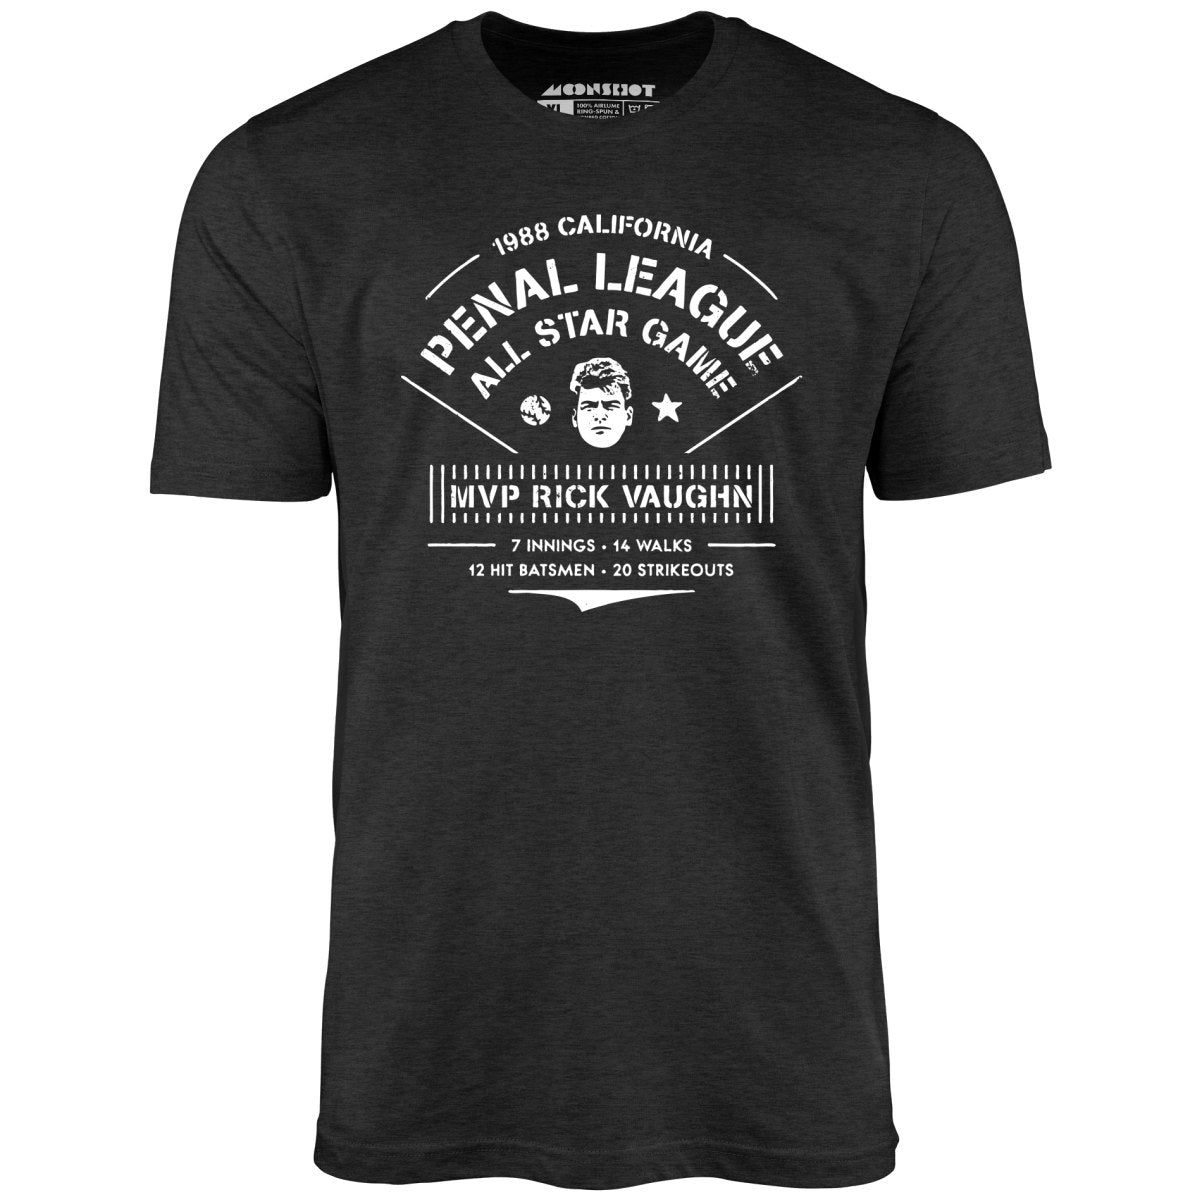 California Penal League All Star Game - Rick Vaughn MVP - Unisex T-Shirt